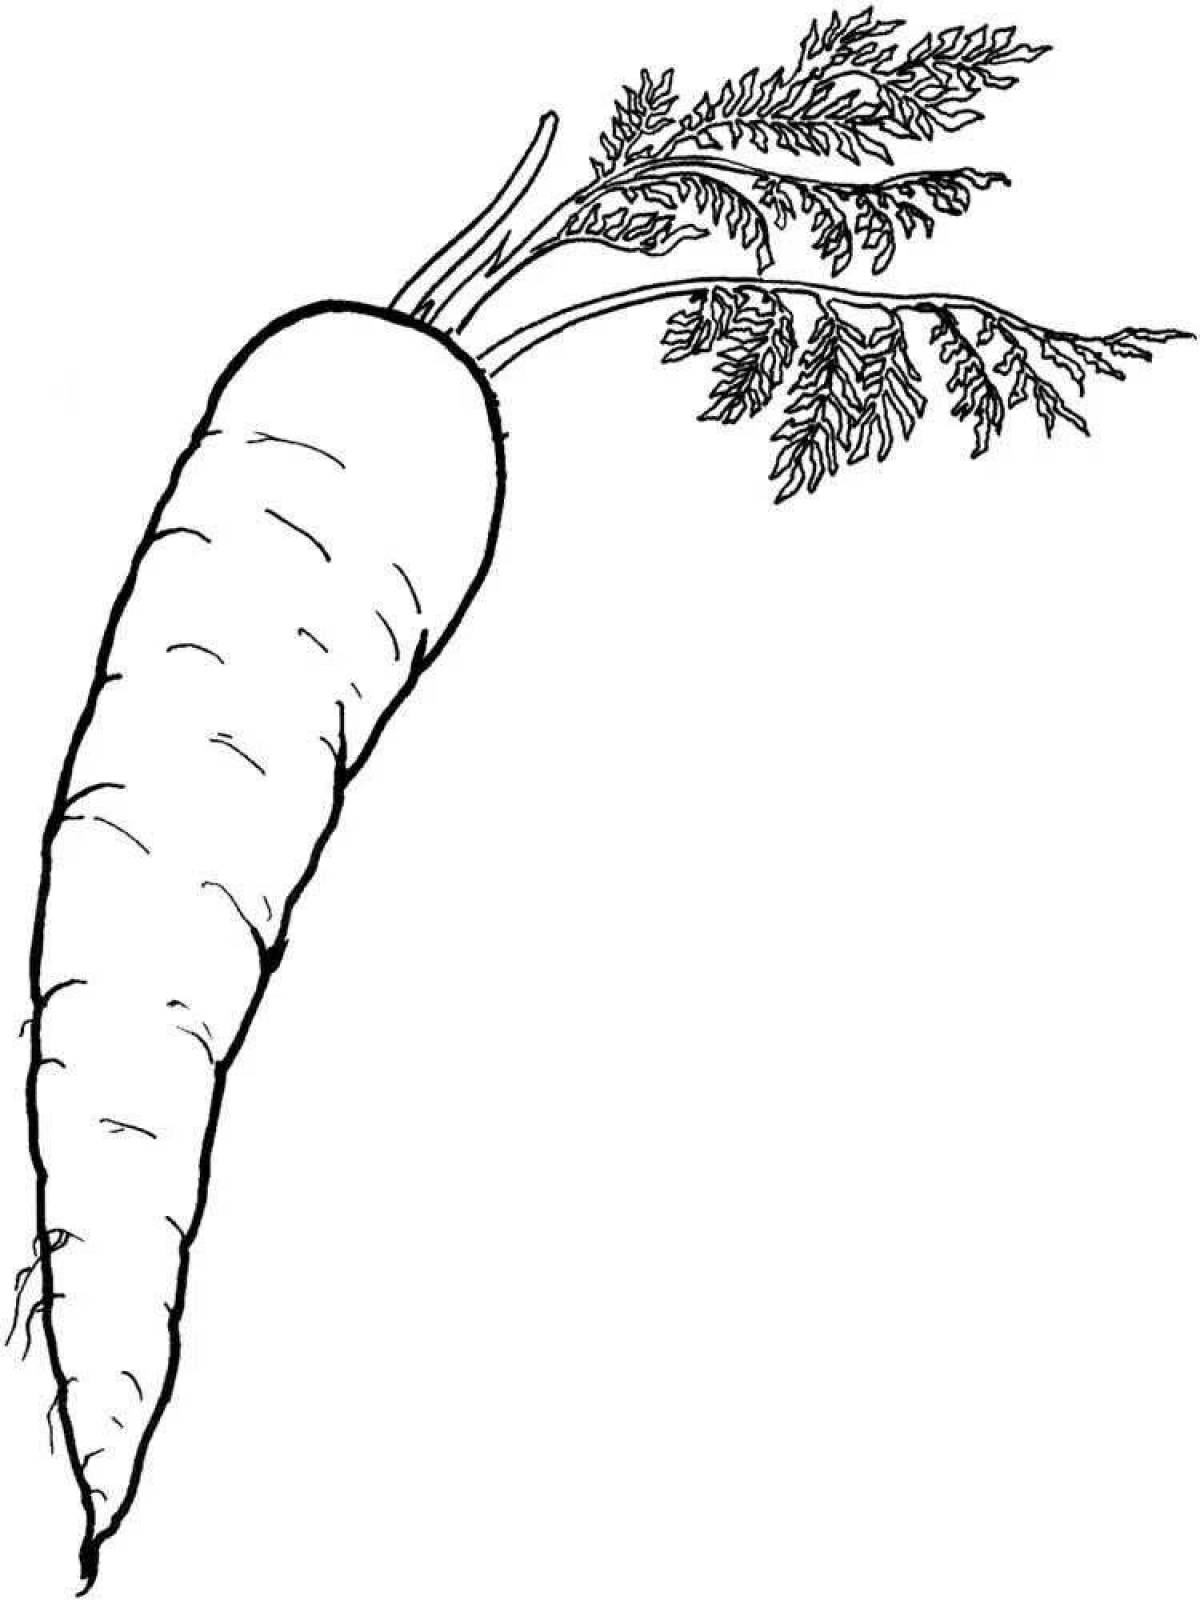 Буйный морковный рисунок